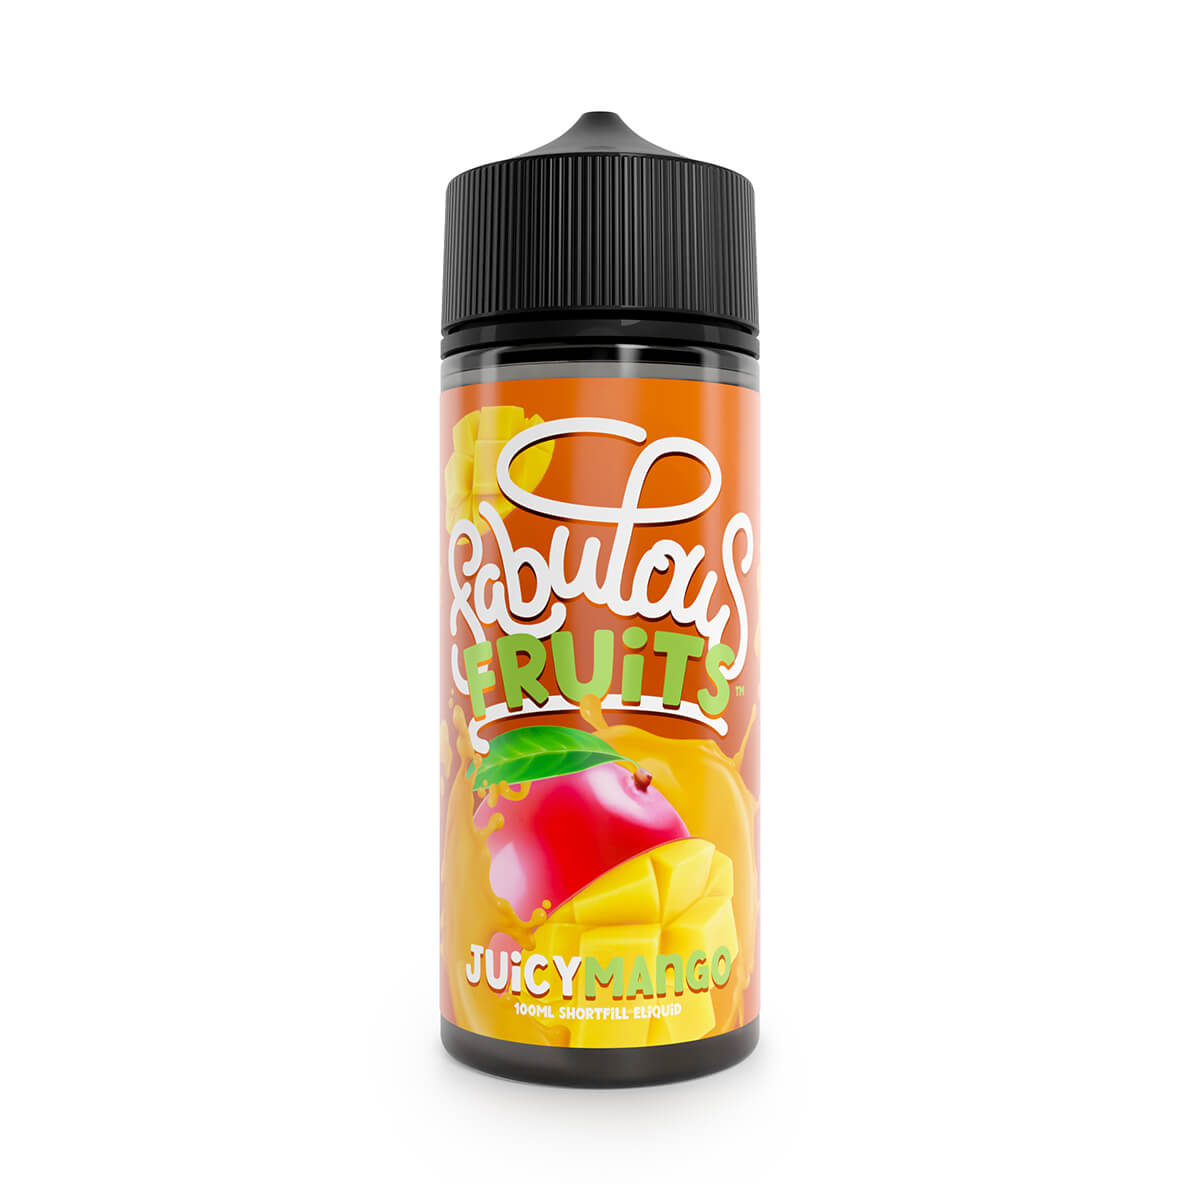 Get Your Juicy Mango Fabulous Fruits 100ml E-Liquid At Dispergo Vaping Now